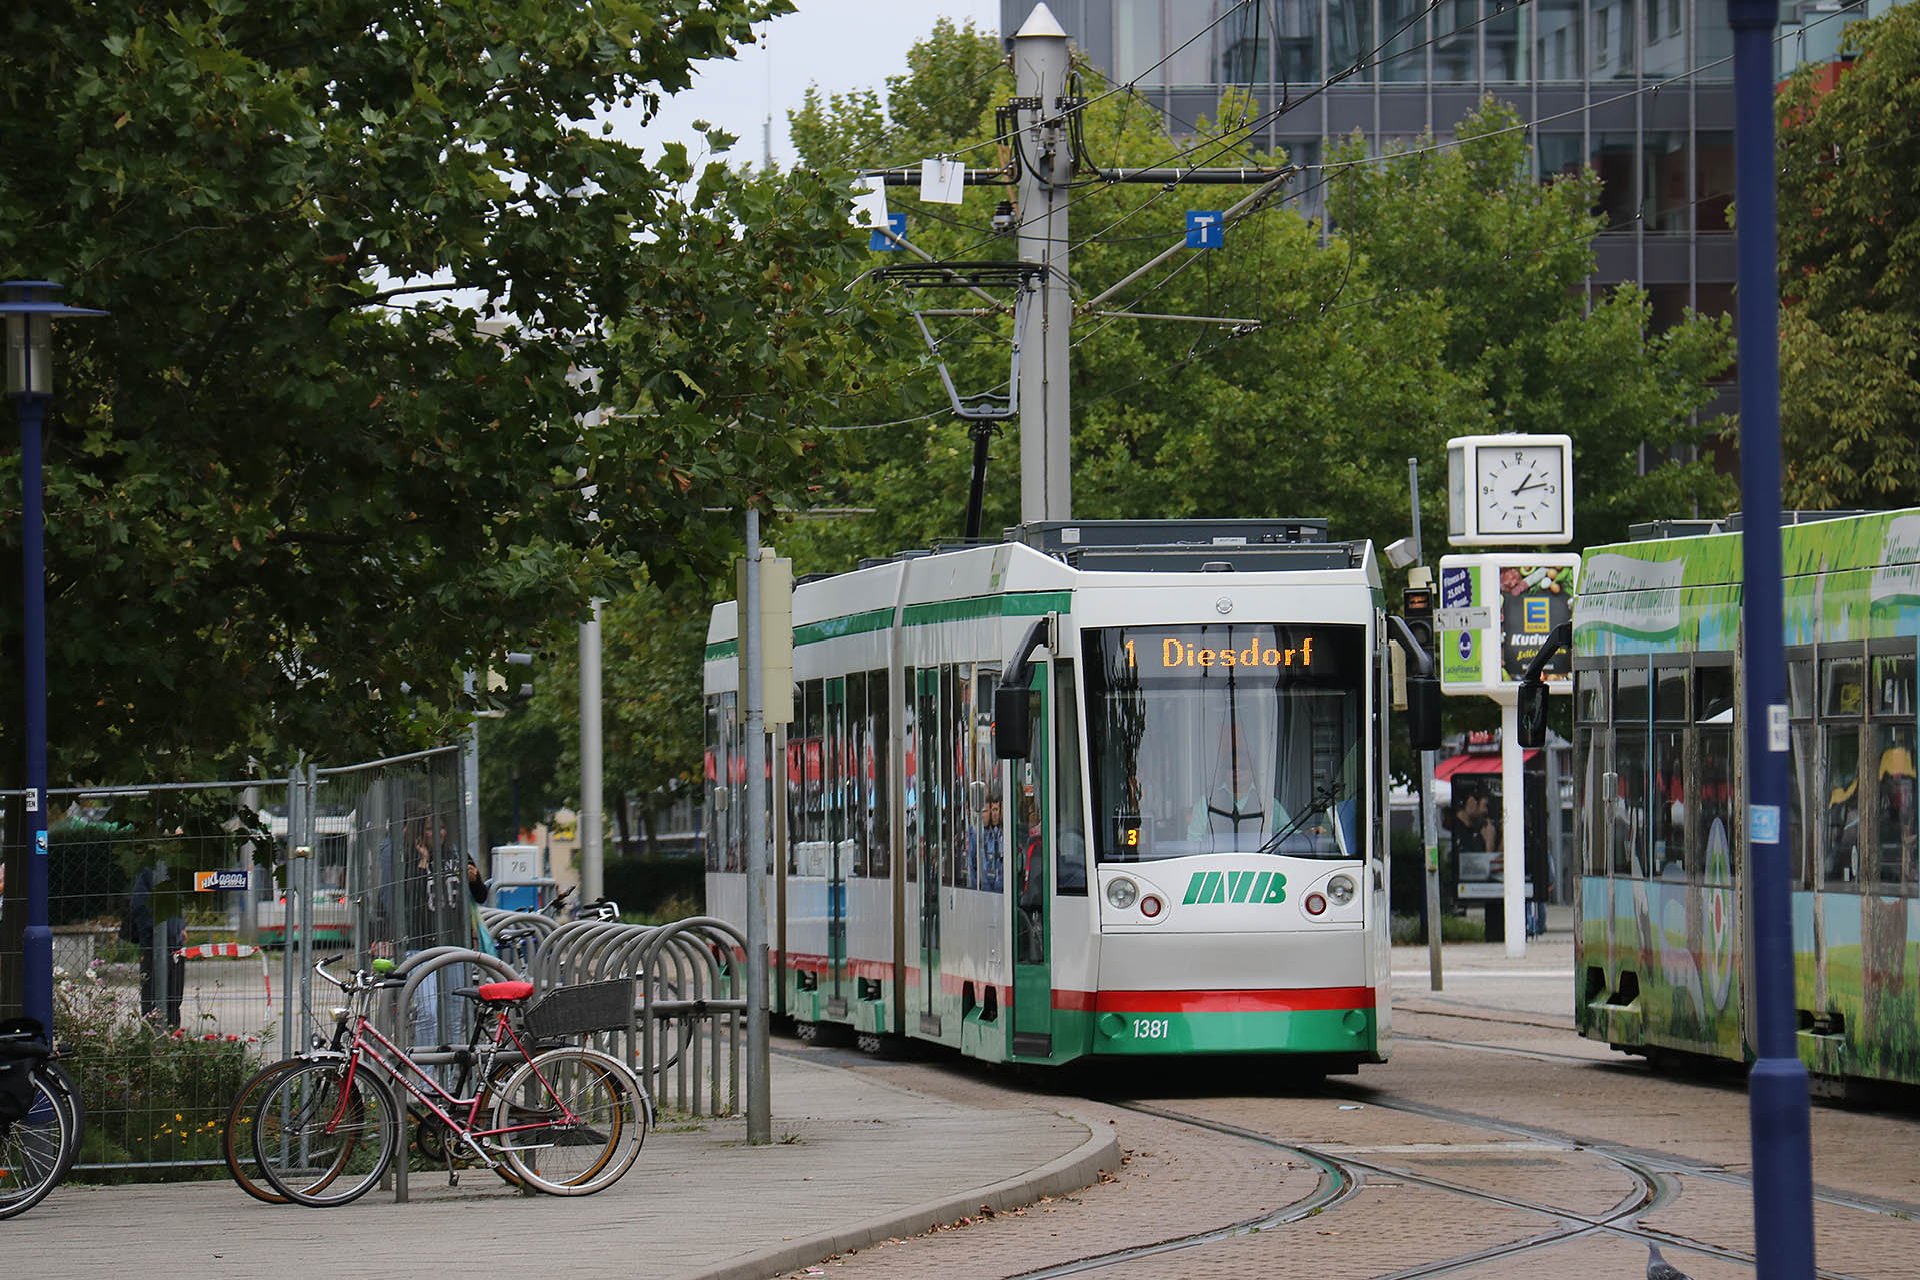 NGT8D 1381 Hier eine Straßenbahn in Normallackierung. A tram with its standard livery.